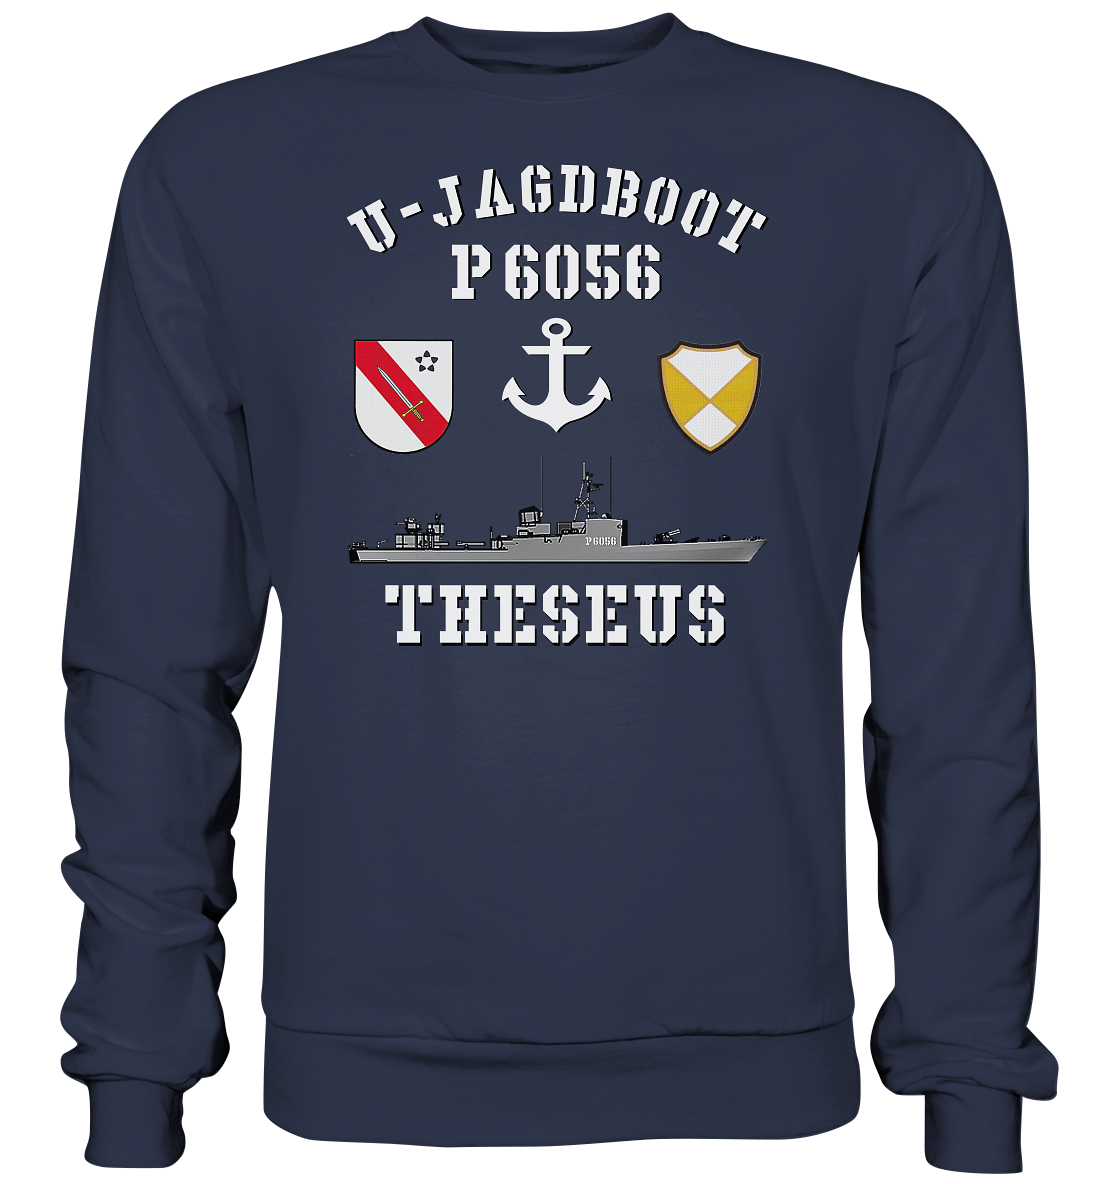 U-Jagdboot P6056 THESEUS Anker - Premium Sweatshirt